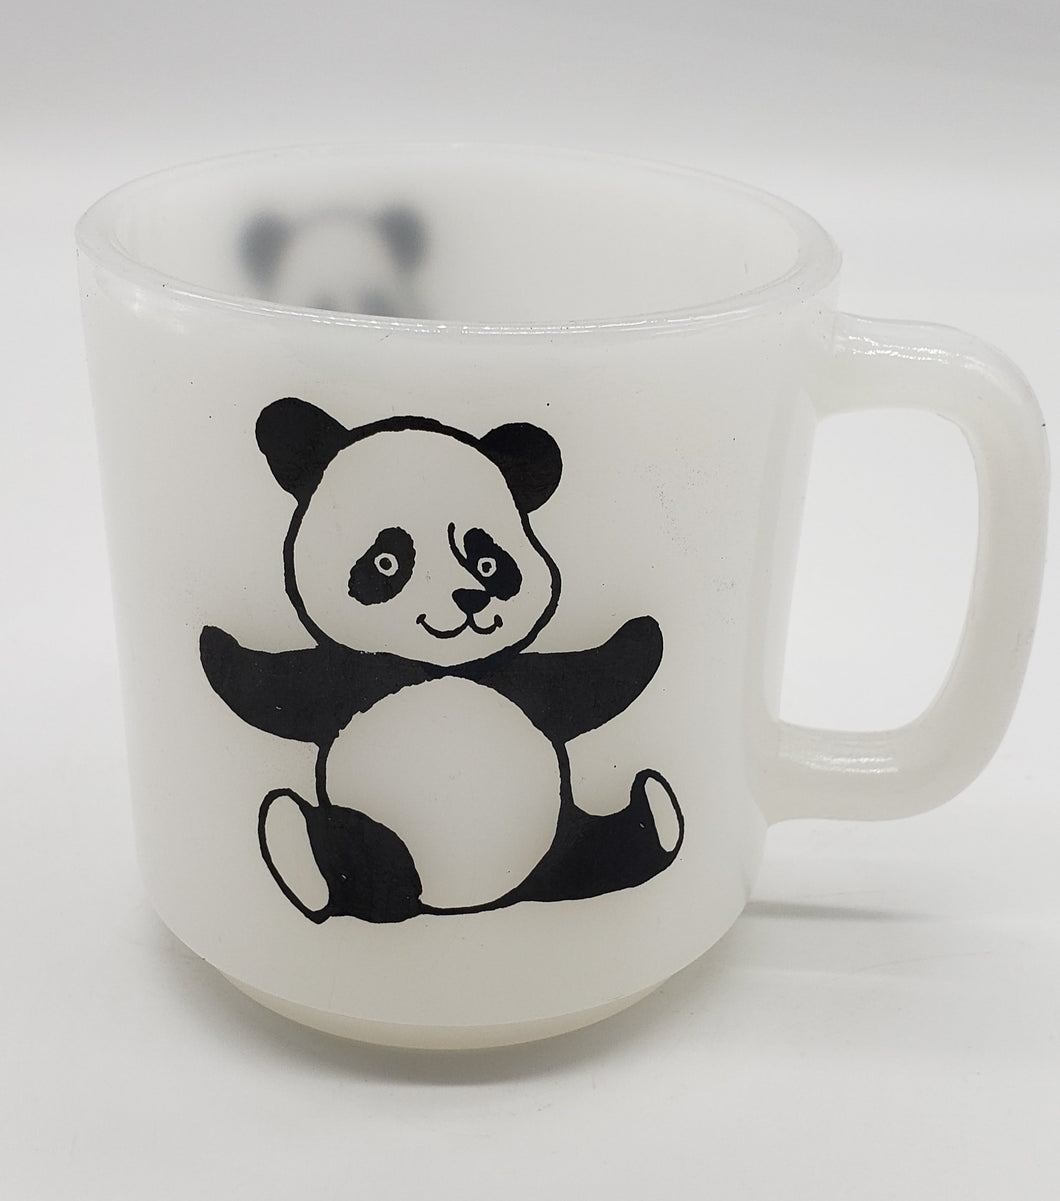 Glasbake Milk Glass Coffee Cup Mug Panda Bear